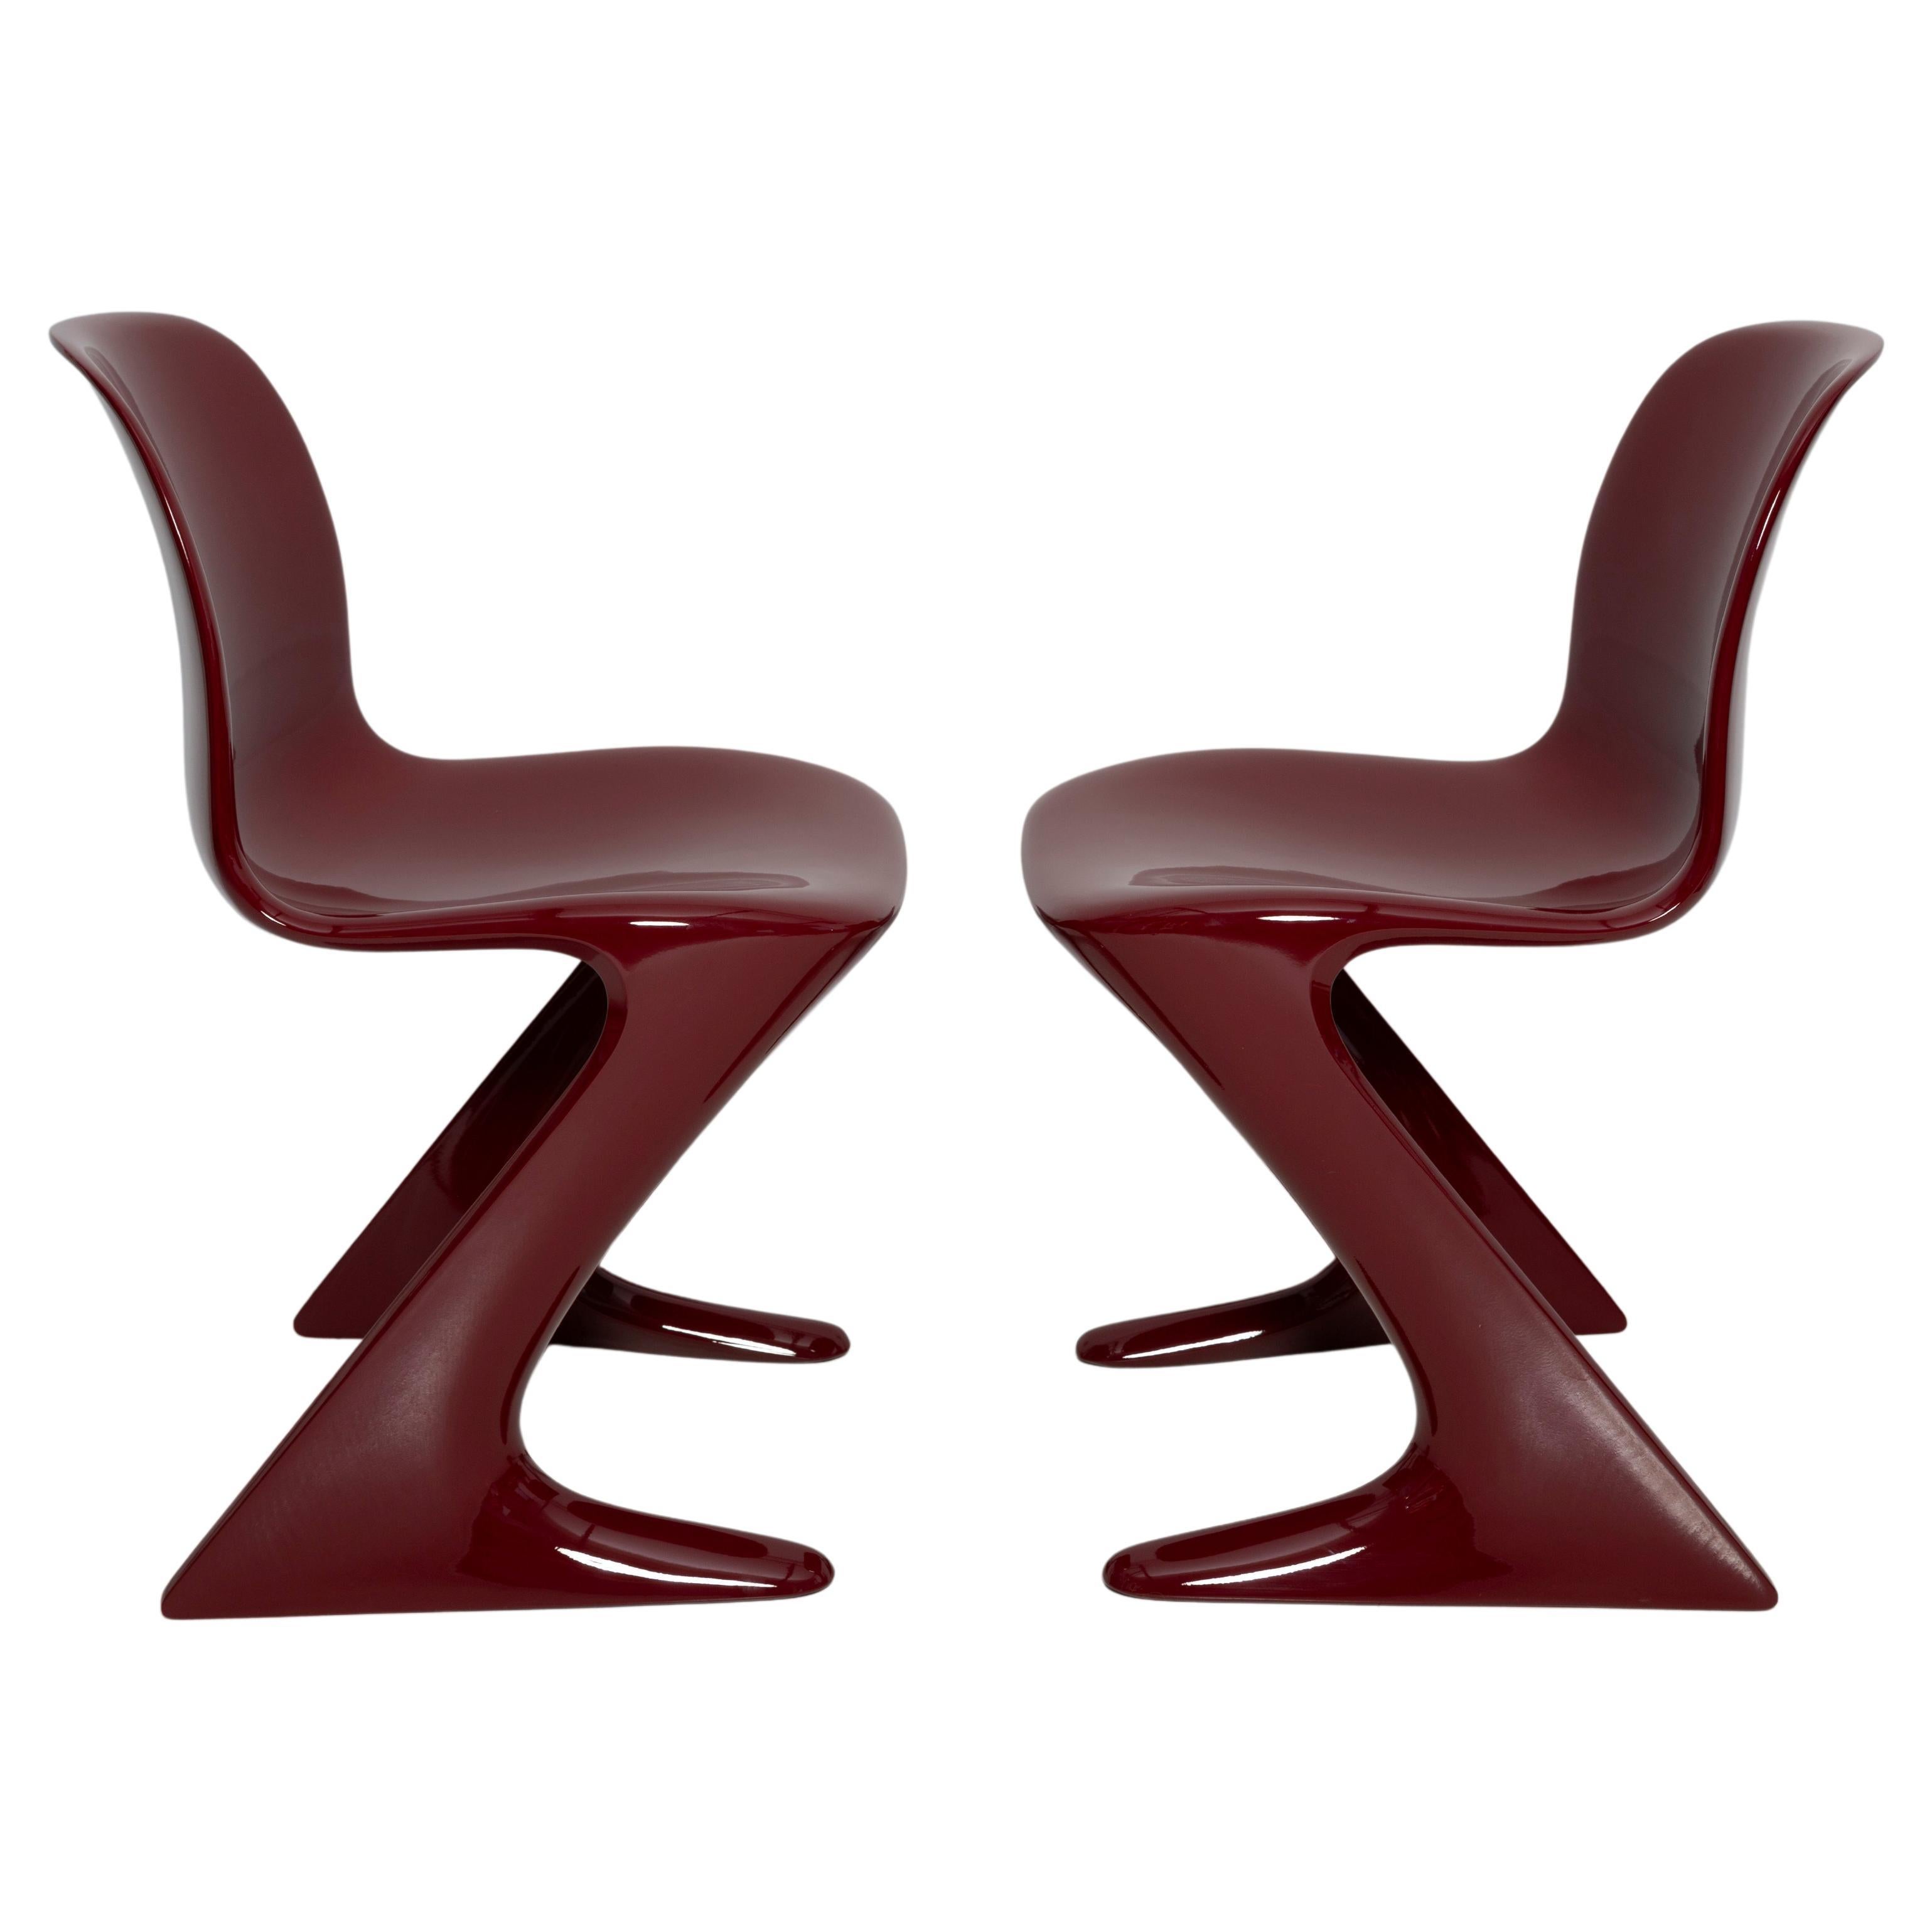 Pair of Dark Red Wine Kangaroo Chairs Designed by Ernst Moeckl, Germany, 1968